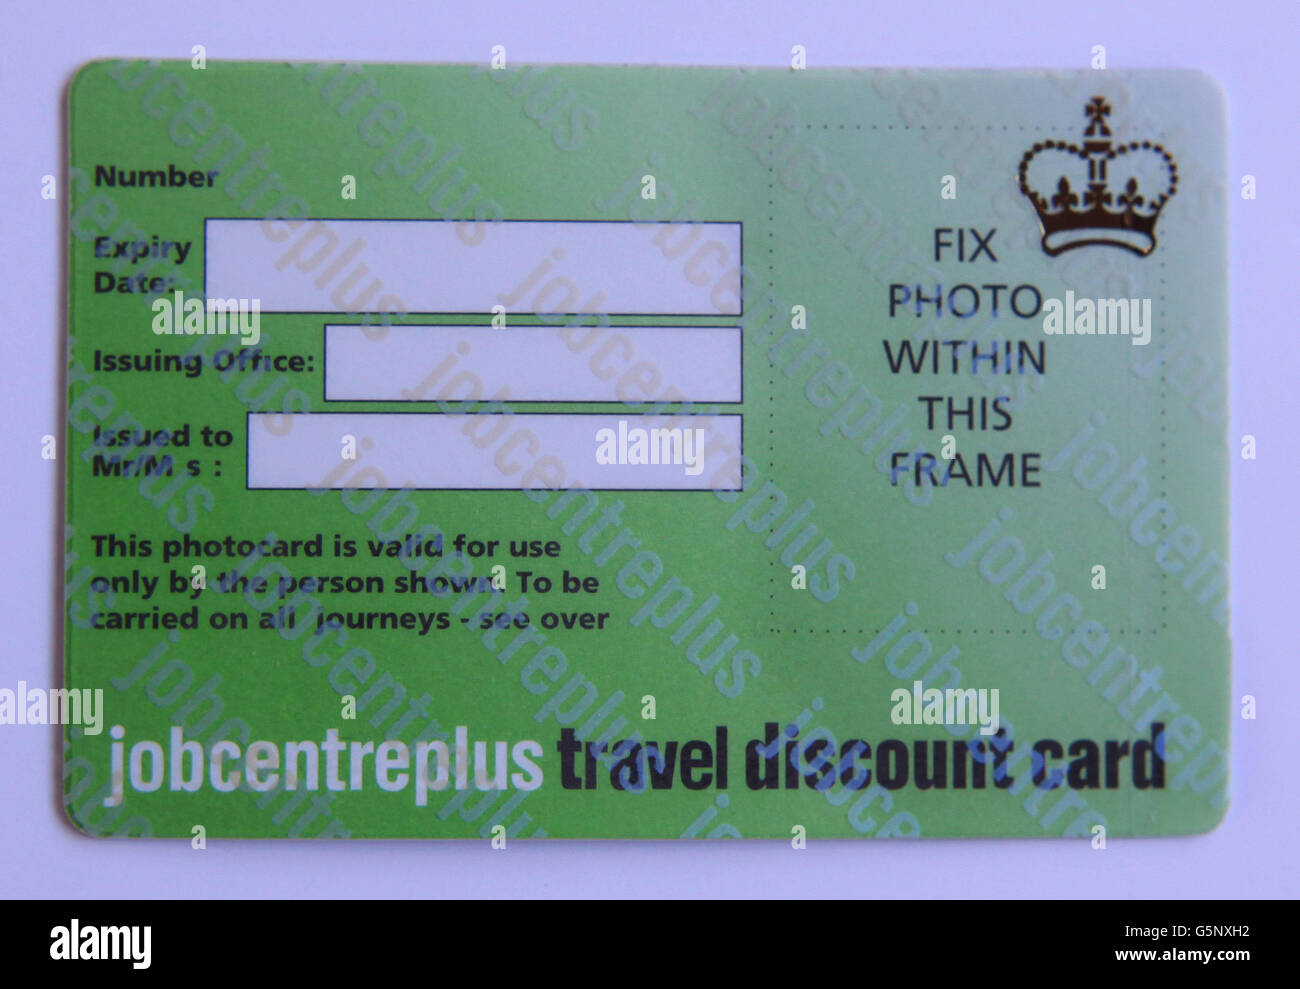 jobcentre plus travel discount card apply online